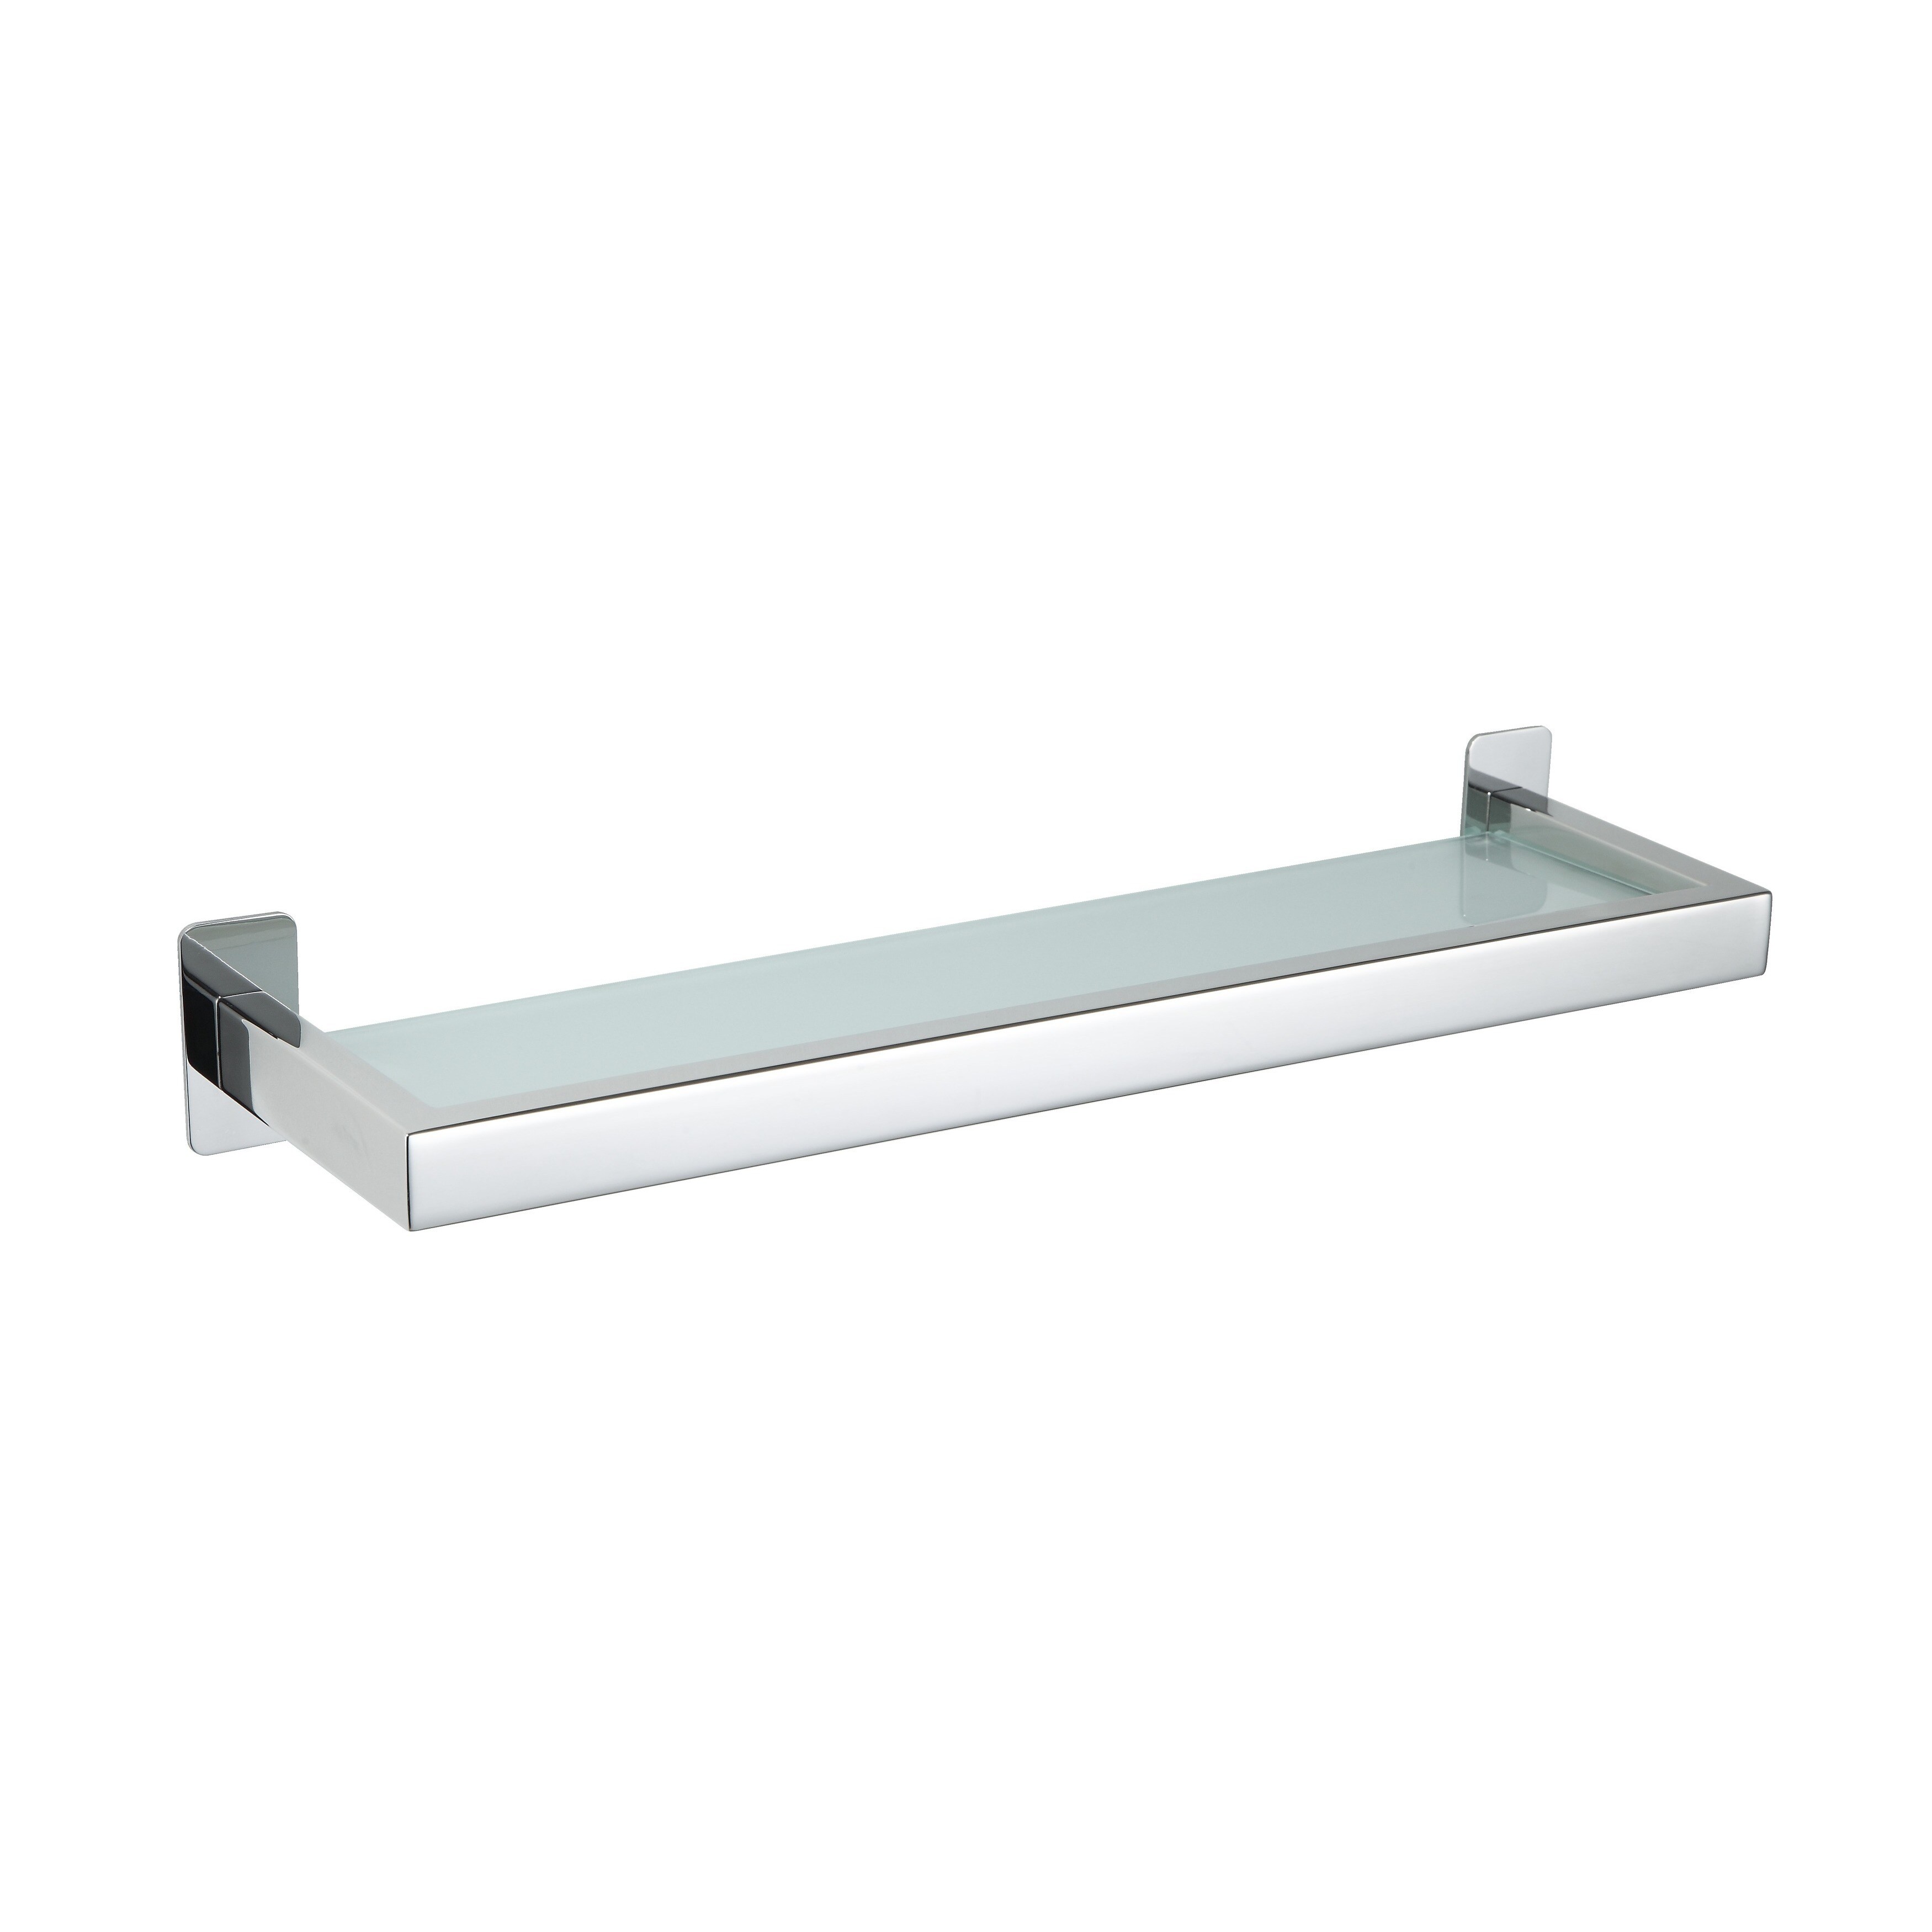 Cortesi Home Rikke Contemporary Stainless Steel Glass Vanity Shelf, Chrome